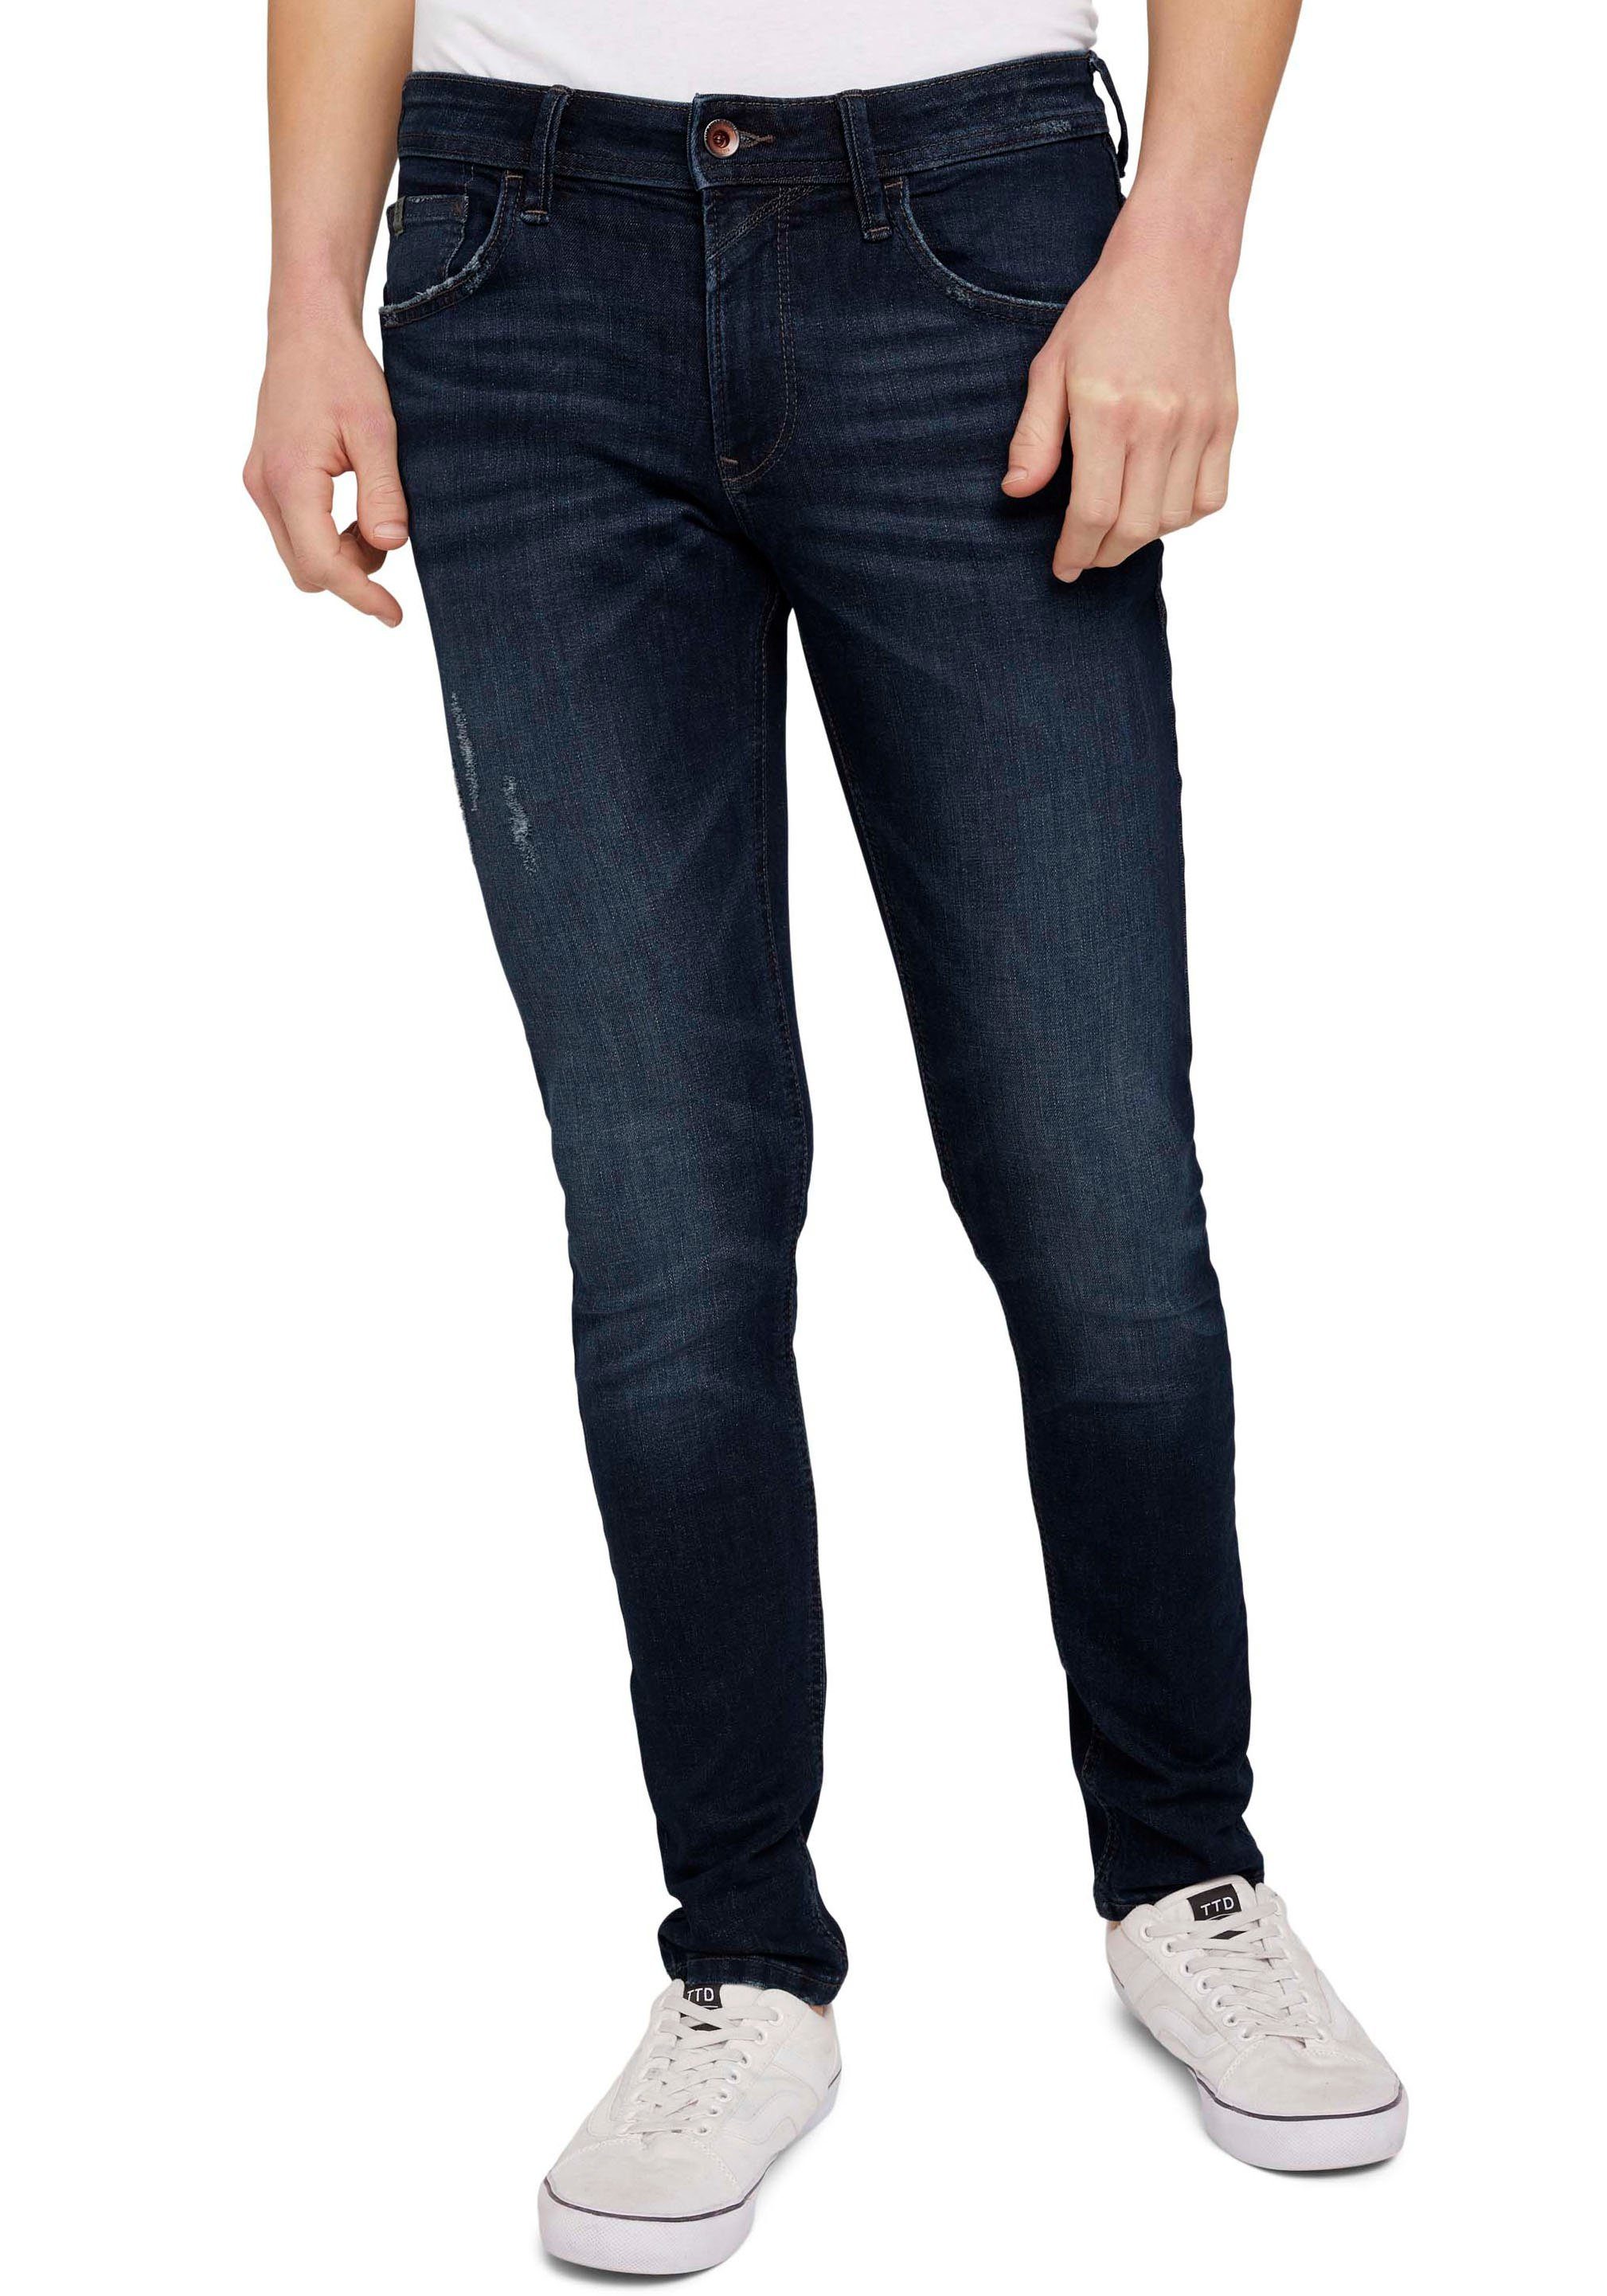 Herren-Skinny-Jeans online kaufen | OTTO